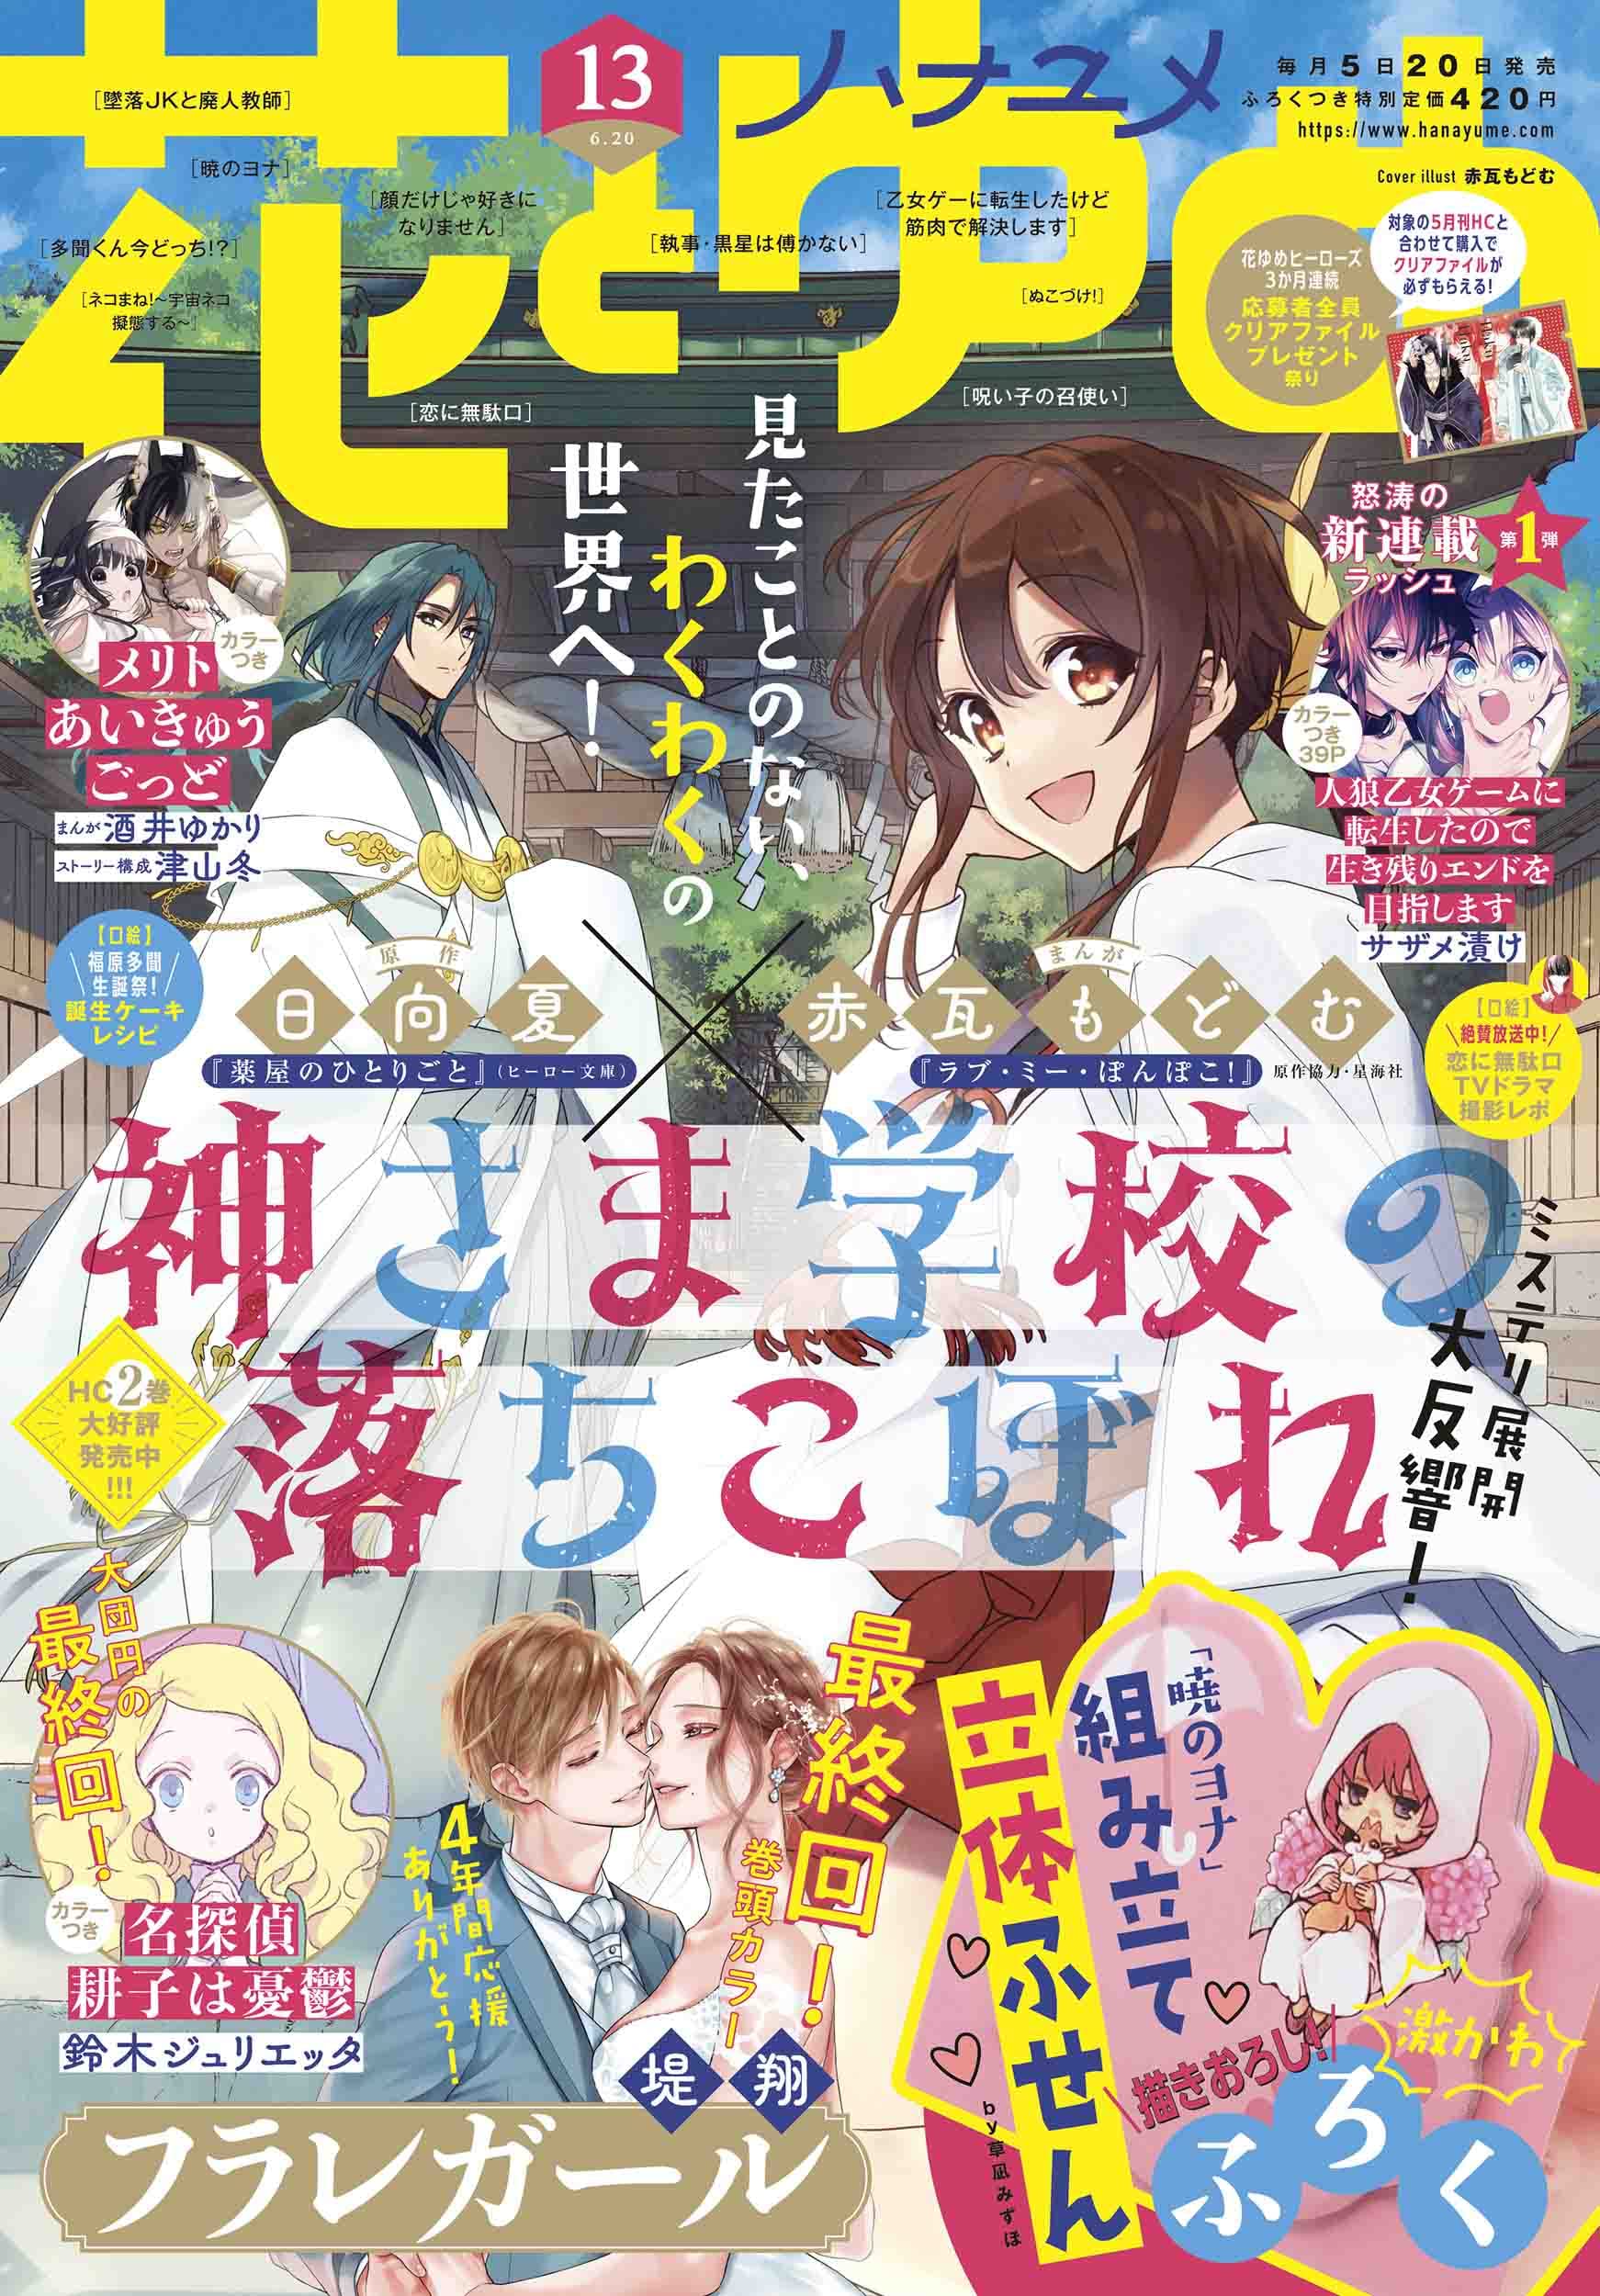 Manga Like Kamisama Gakkou no Ochikobore